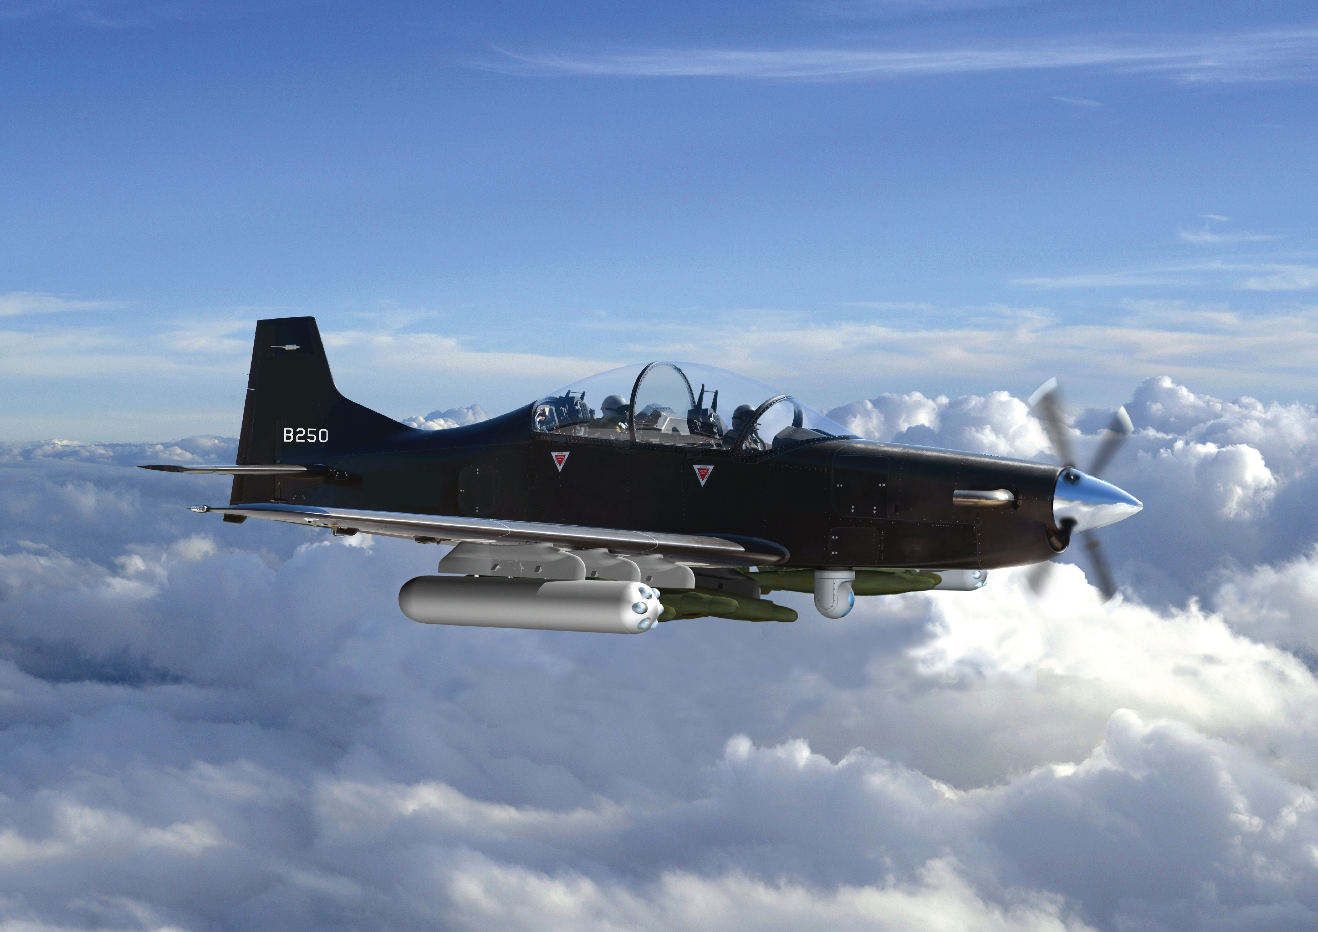 Calidus pursues B-250 light attack aircraft programme